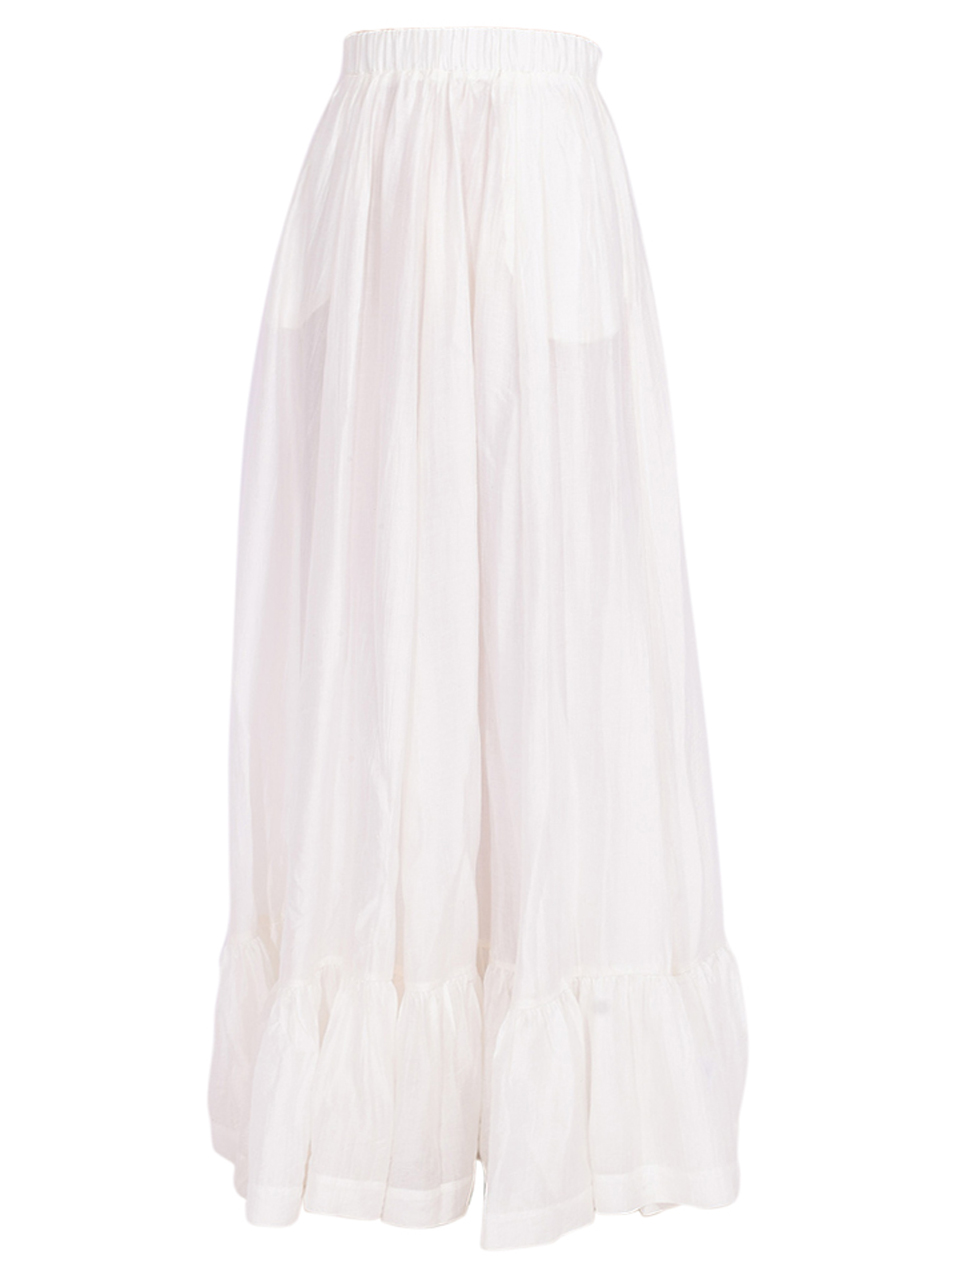 SABINA MUSAYEV Kylo Skirt in Ivory Product Shot 